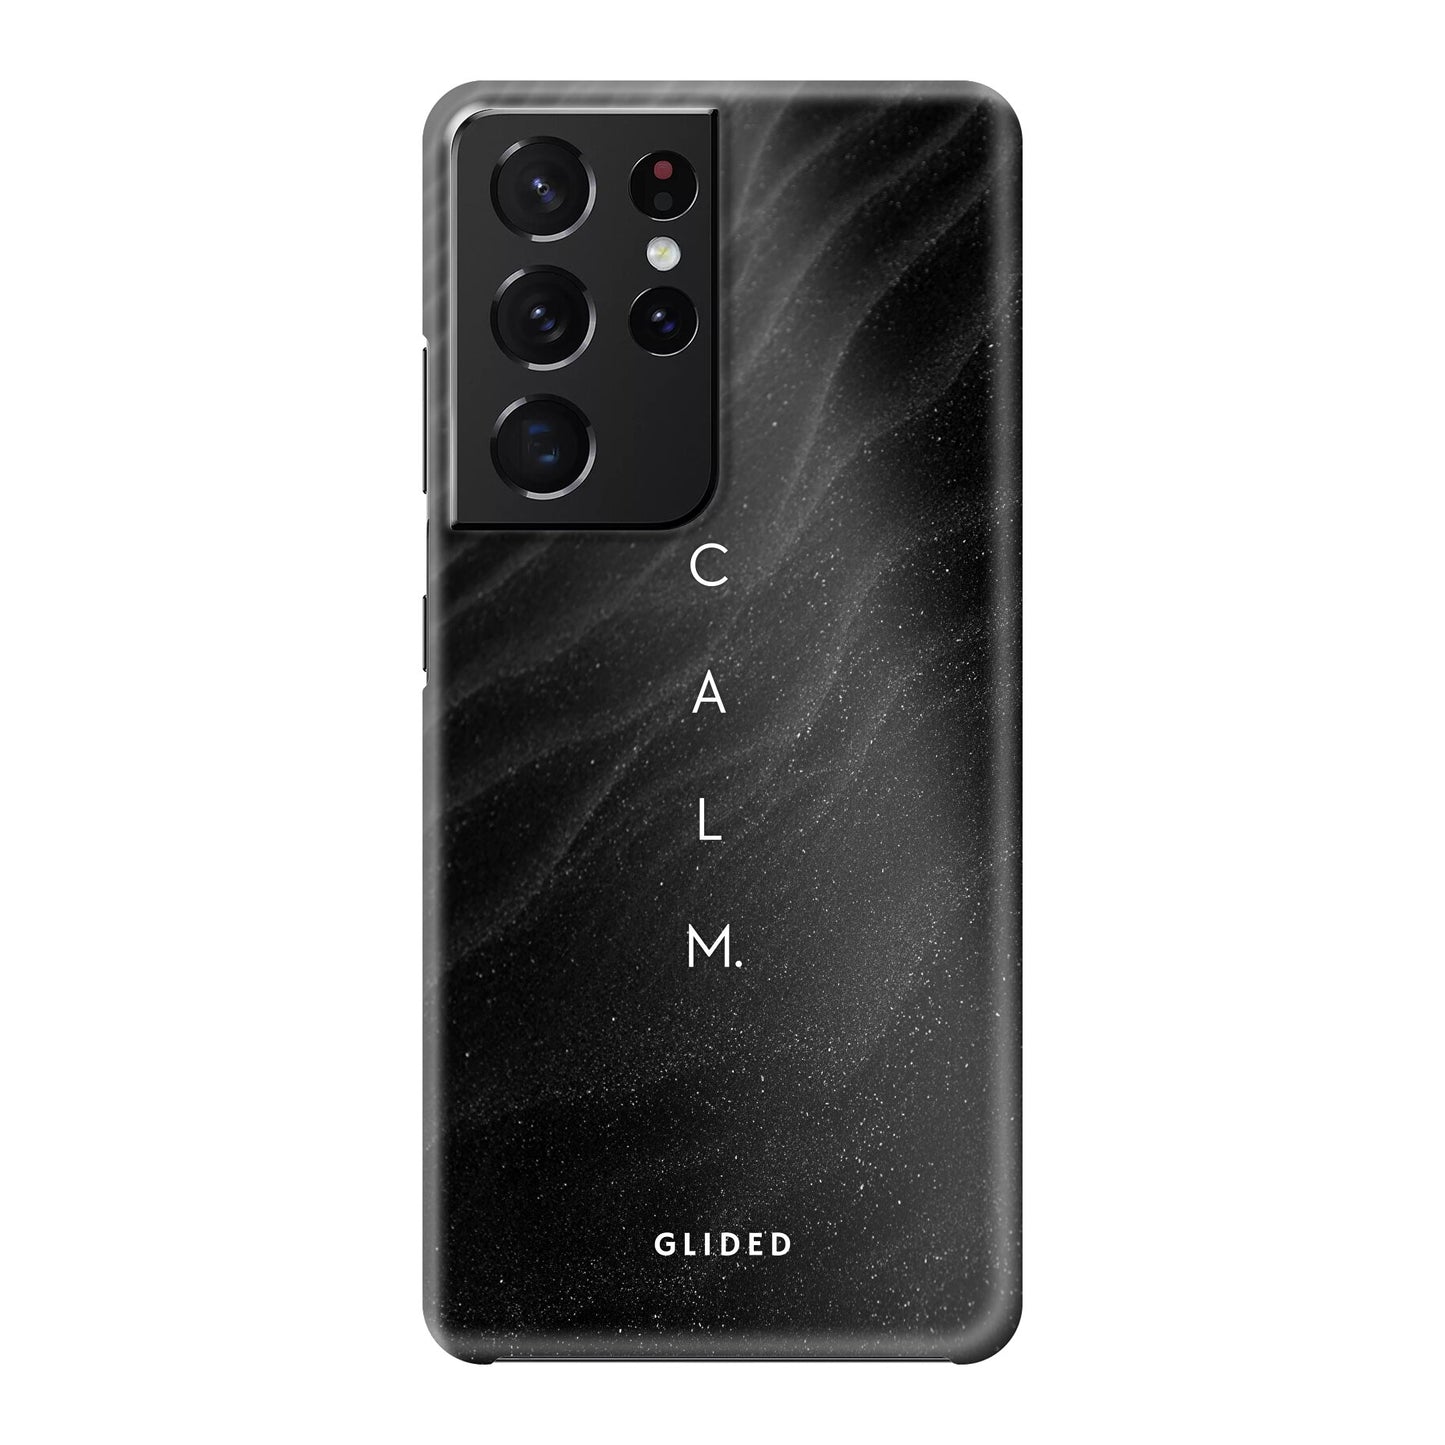 Calm - Samsung Galaxy S21 Ultra 5G Handyhülle Hard Case